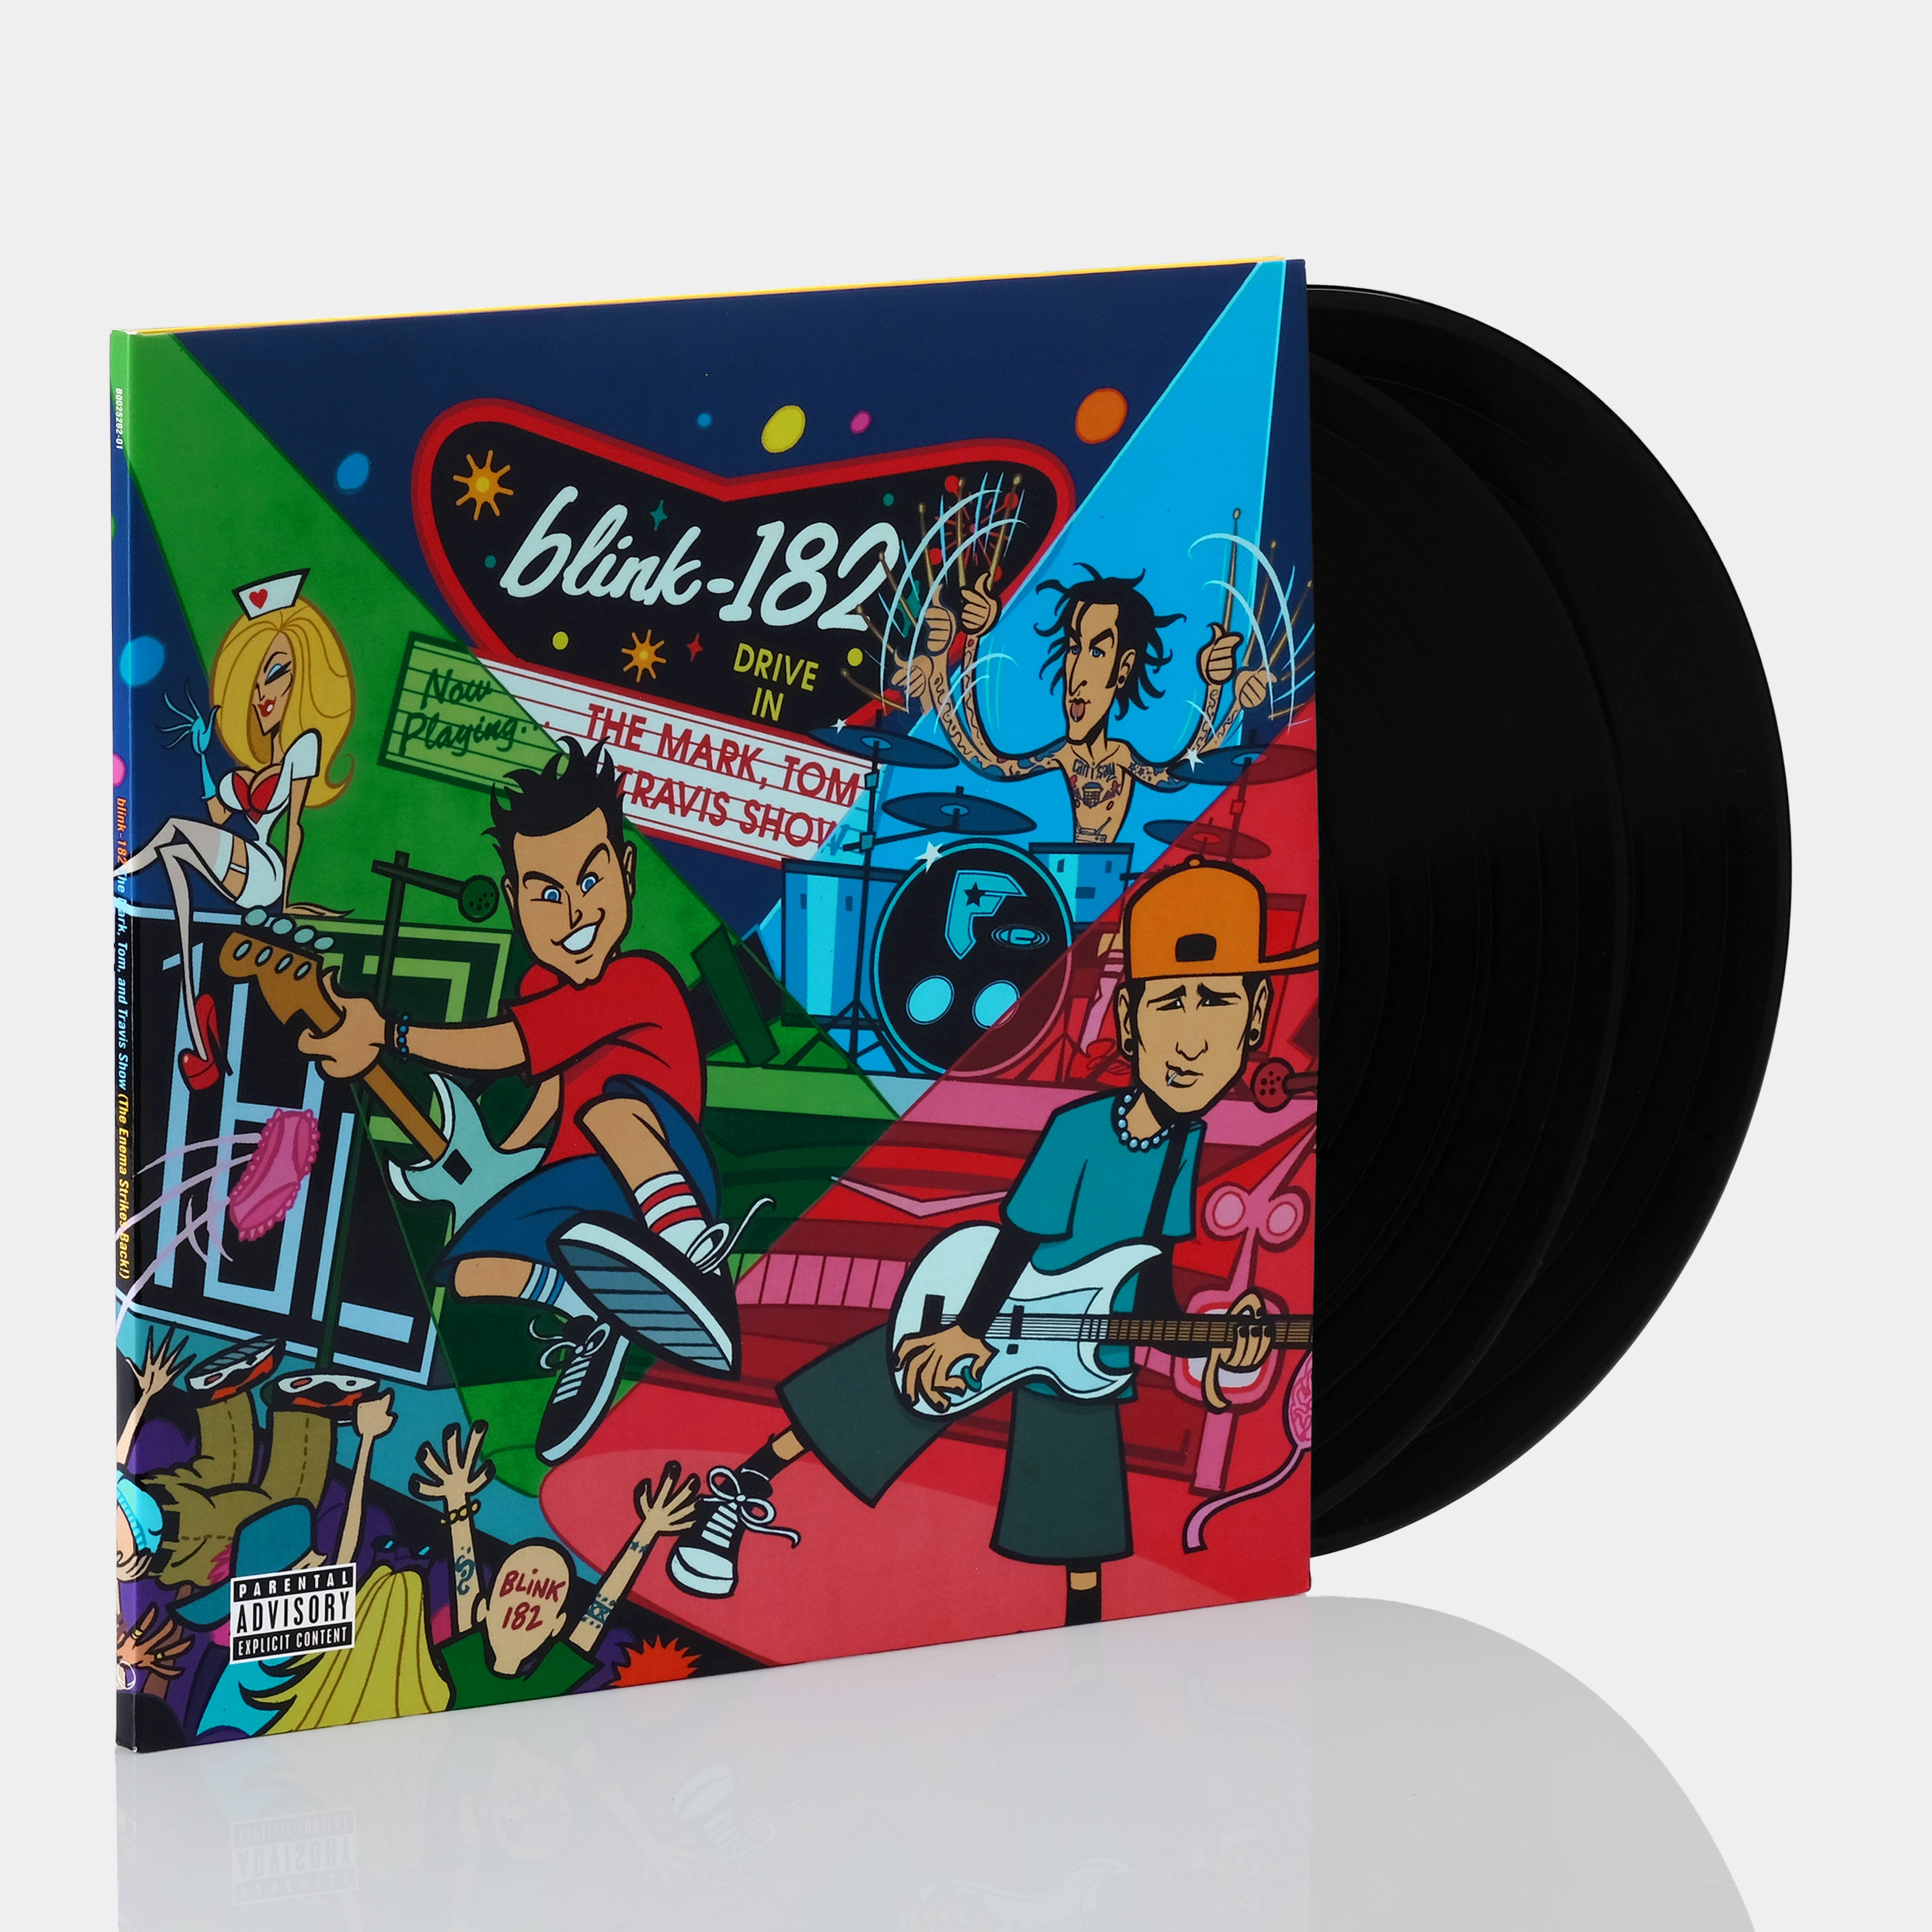 Blink-182 - The Mark, Tom, and Travis Show (The Enema Strikes Back!) 2xLP Vinyl Record